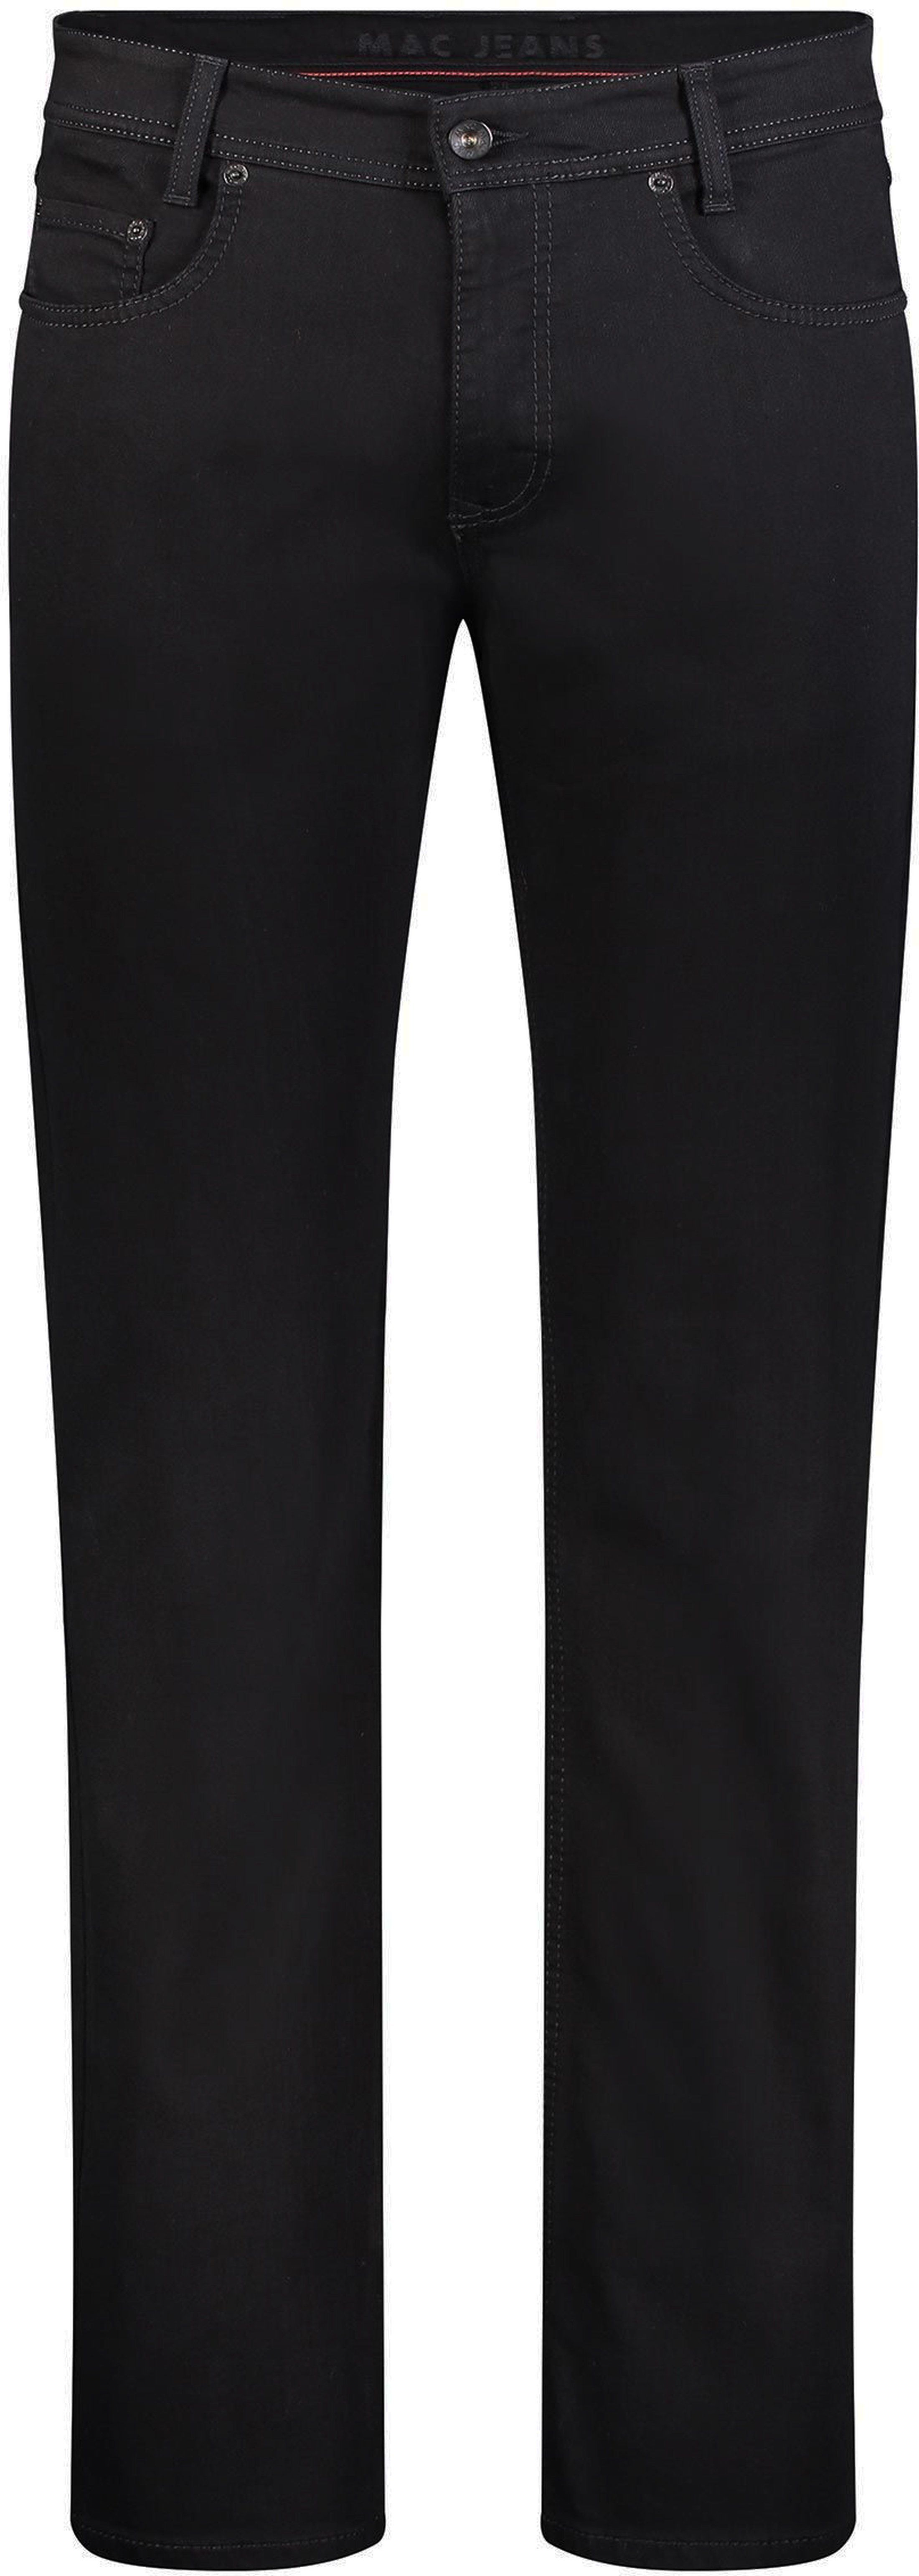 Mac Trousers Arne Stretch H900 Black size W 30